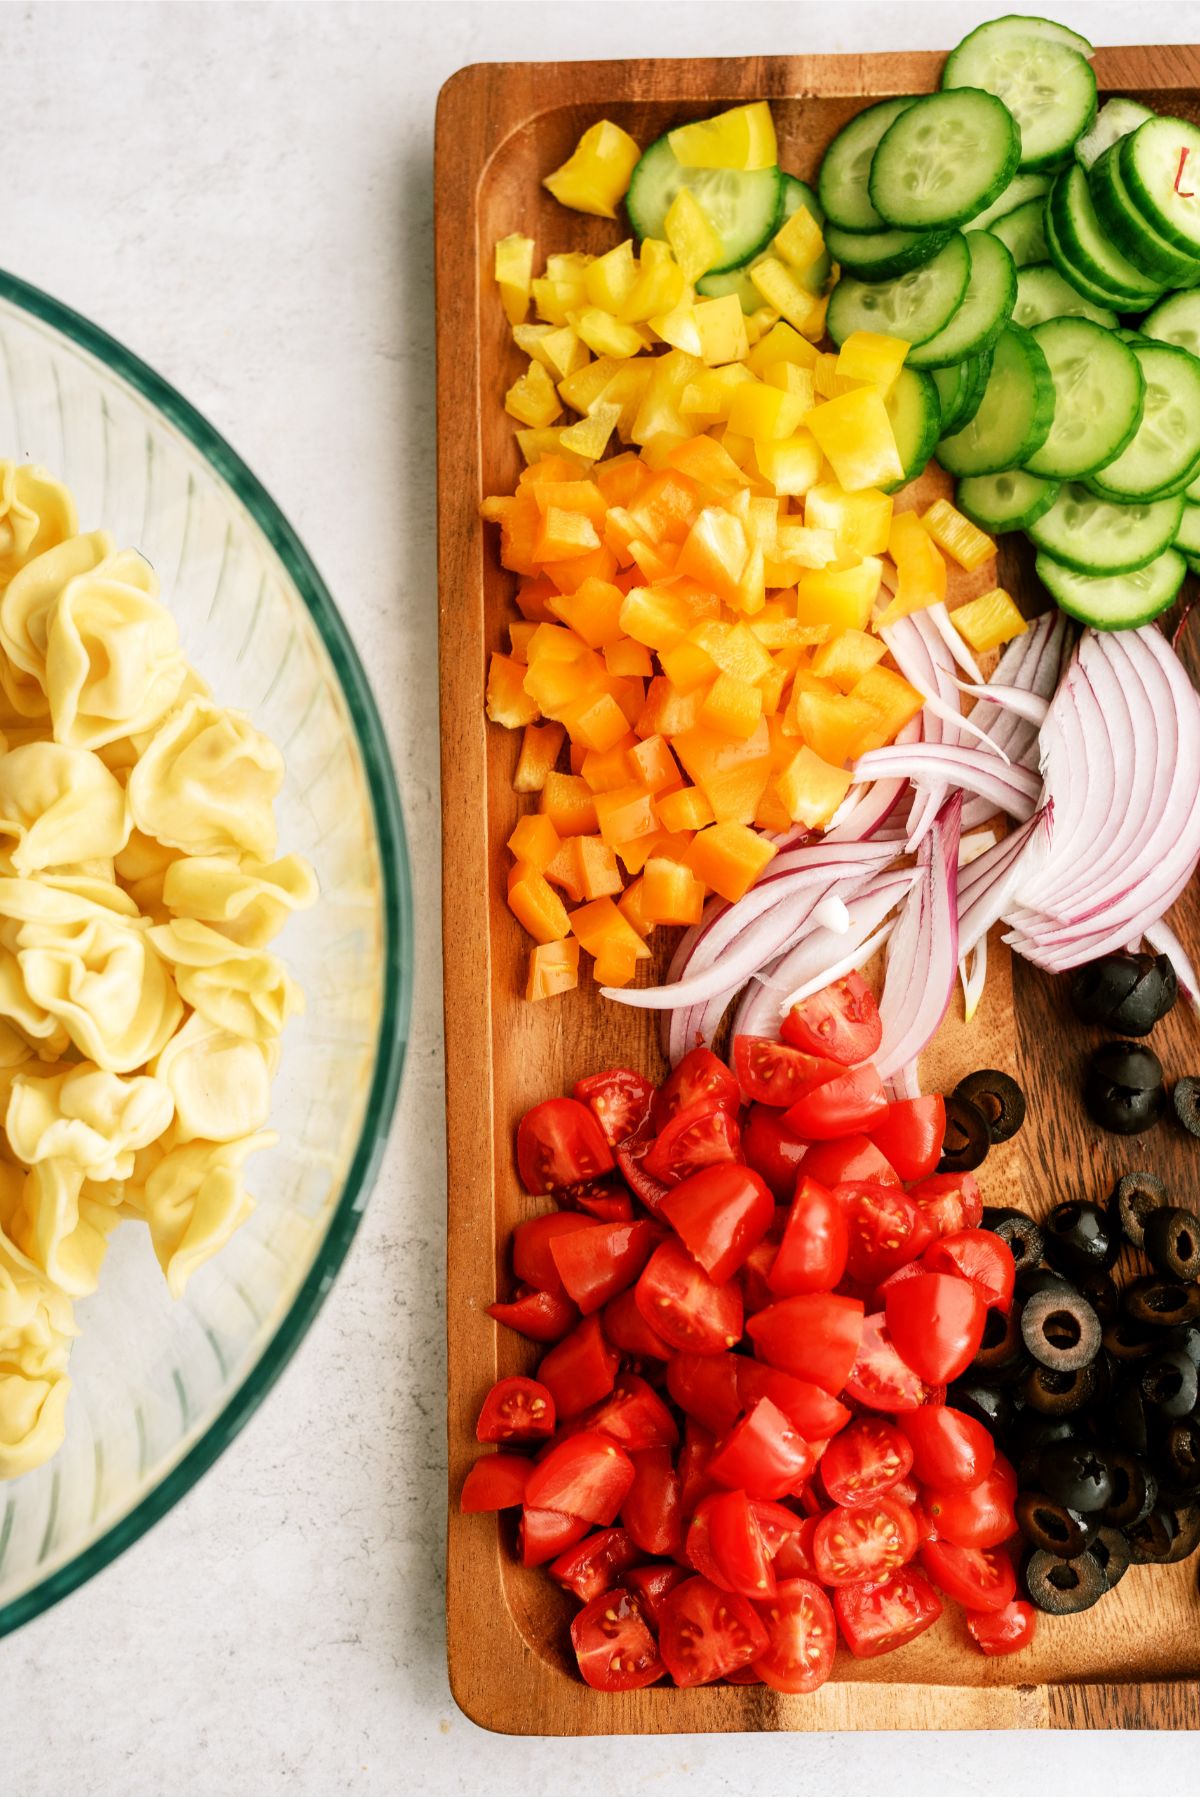 Ingredients needed to make Tortellini Pasta Salad